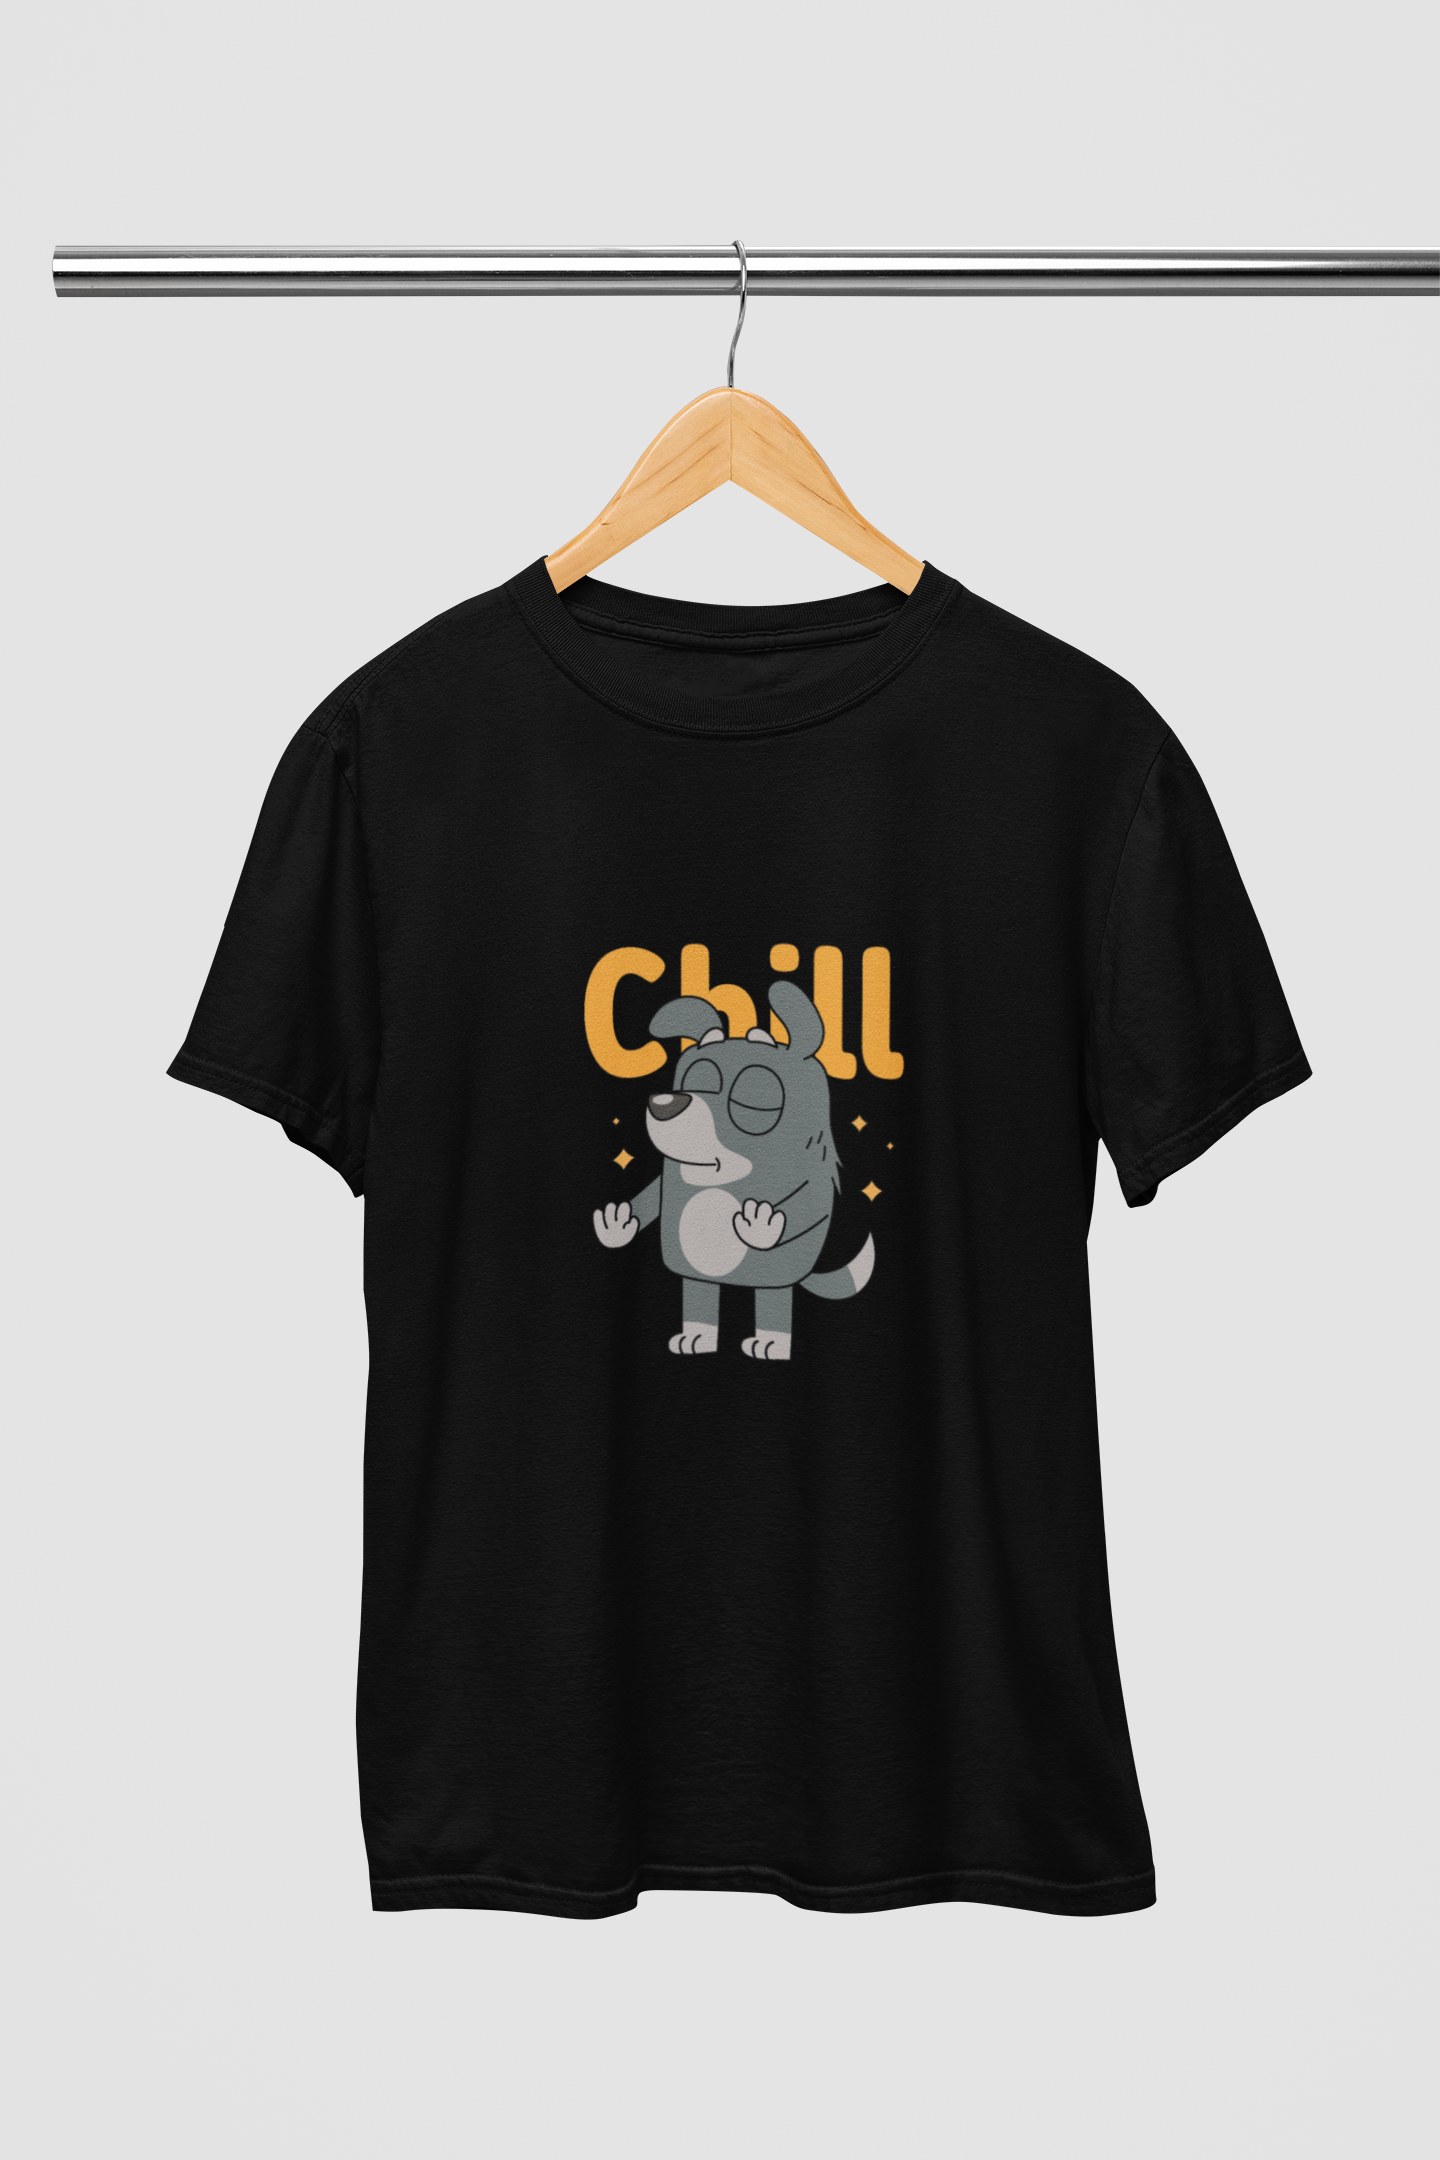 Dog Say Chill T-Shirt